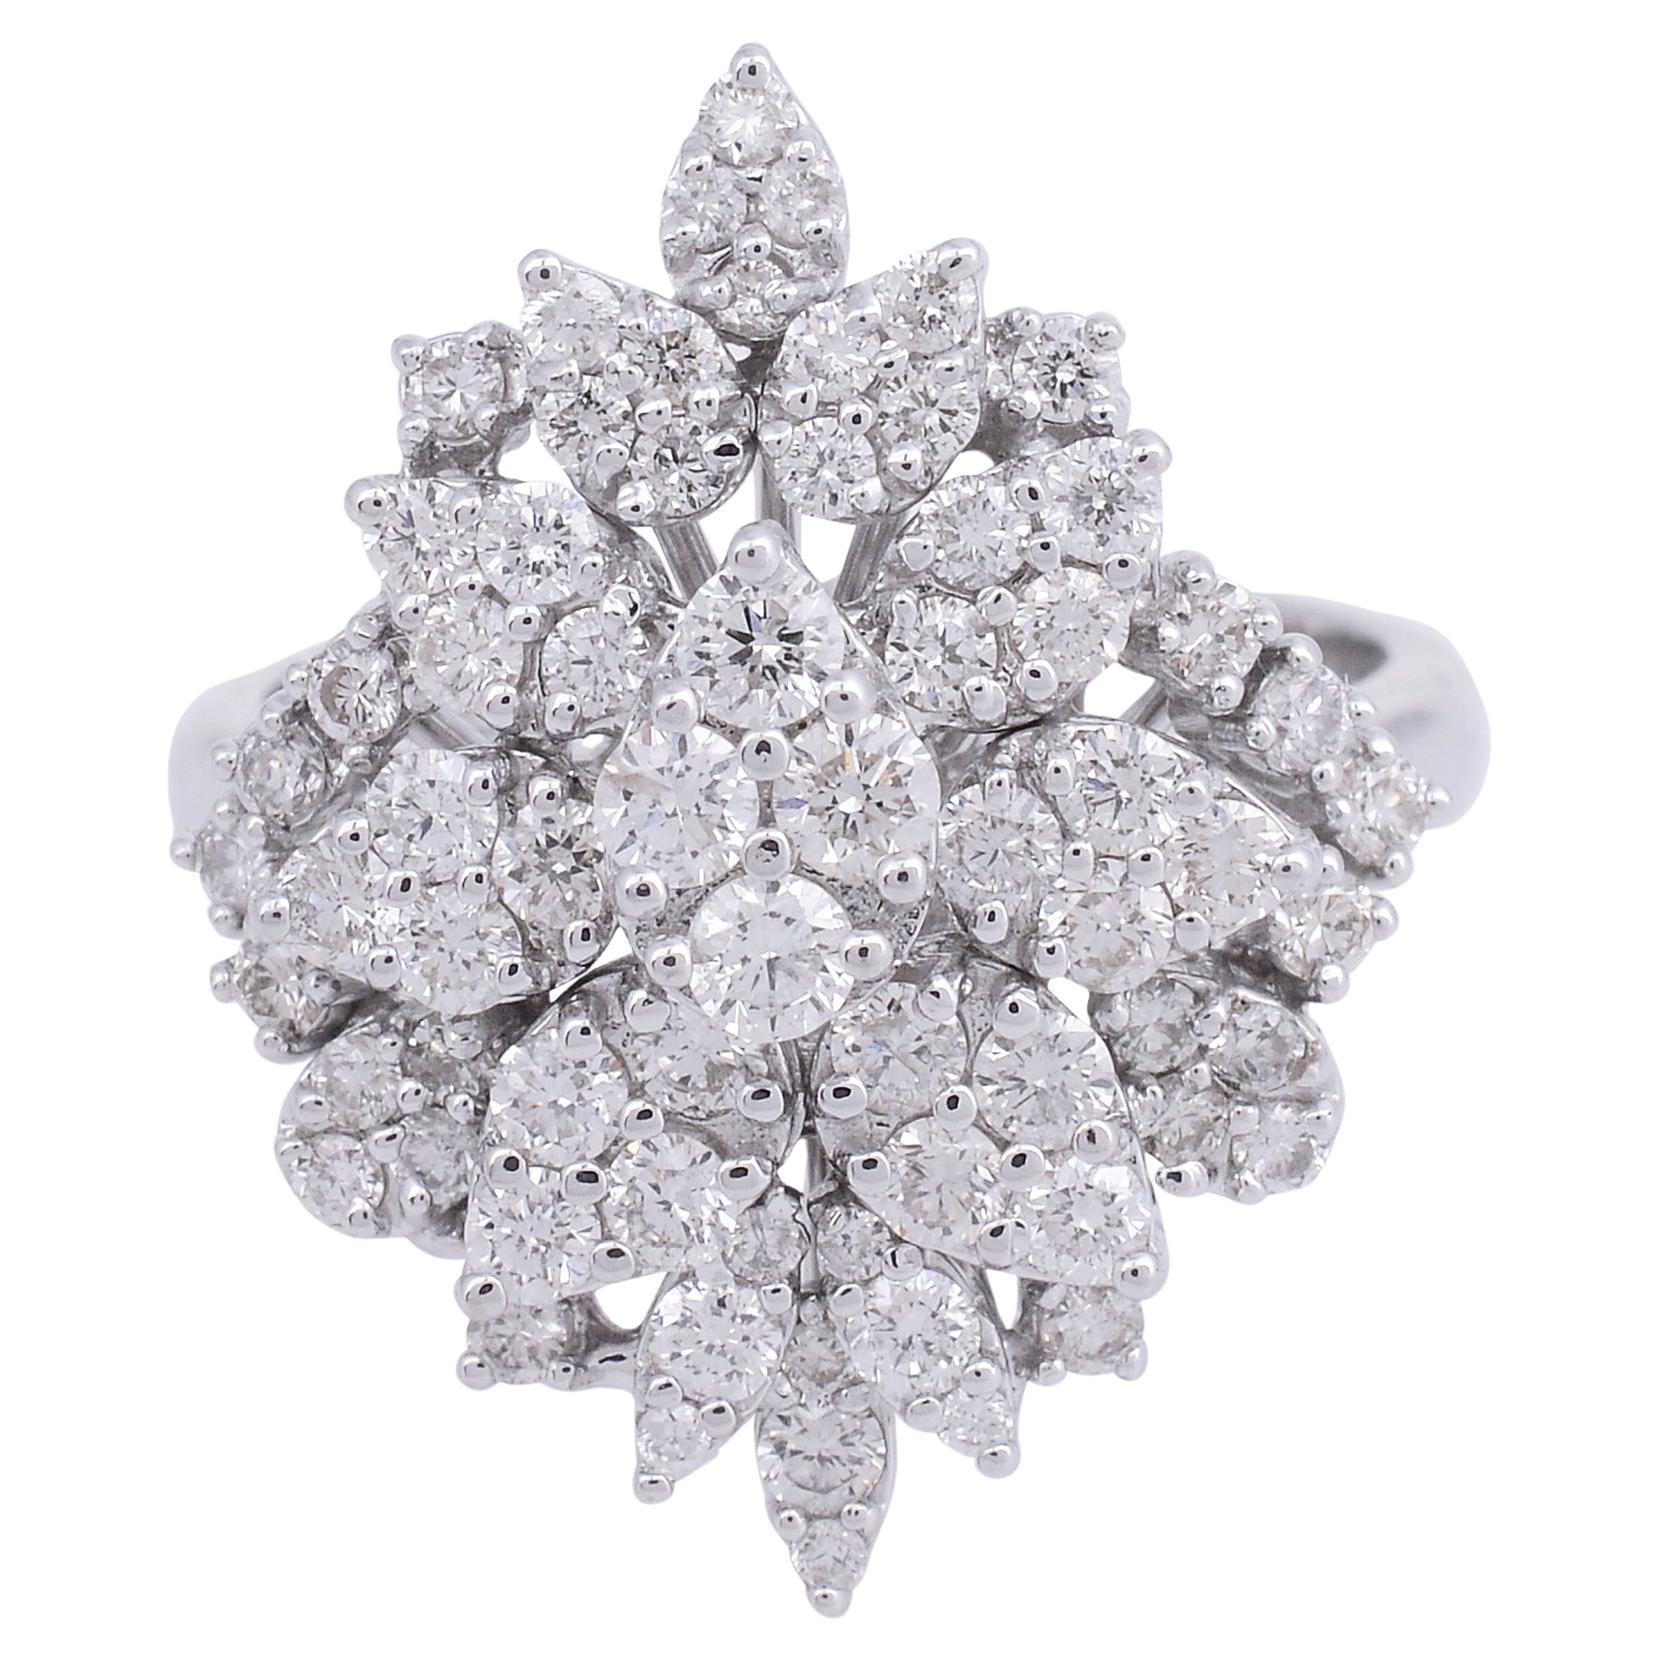 Natural 1.45 Carat Diamond Cluster Ring 14 Karat White Gold Handmade Jewelry